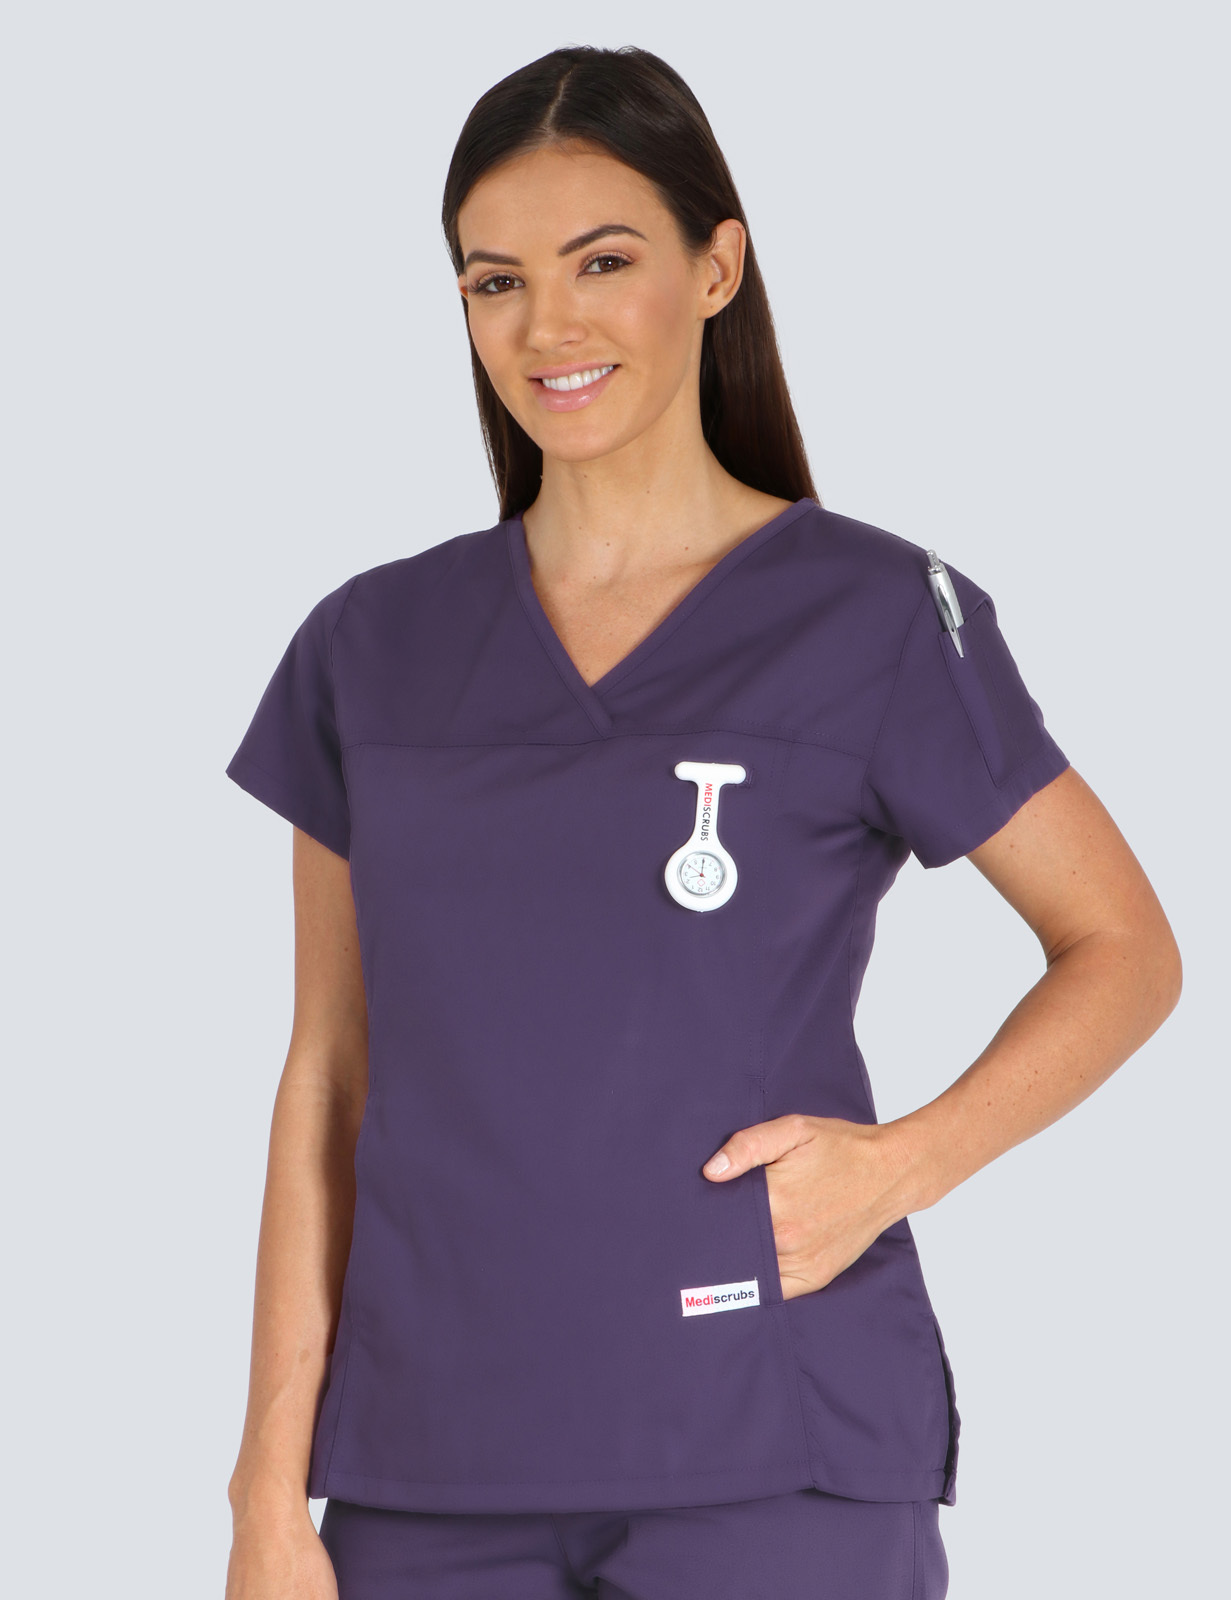 Peninsula Health - Dialysis ANUM (Women's Fit Solid Scrub Top in Aubergine incl Logos)